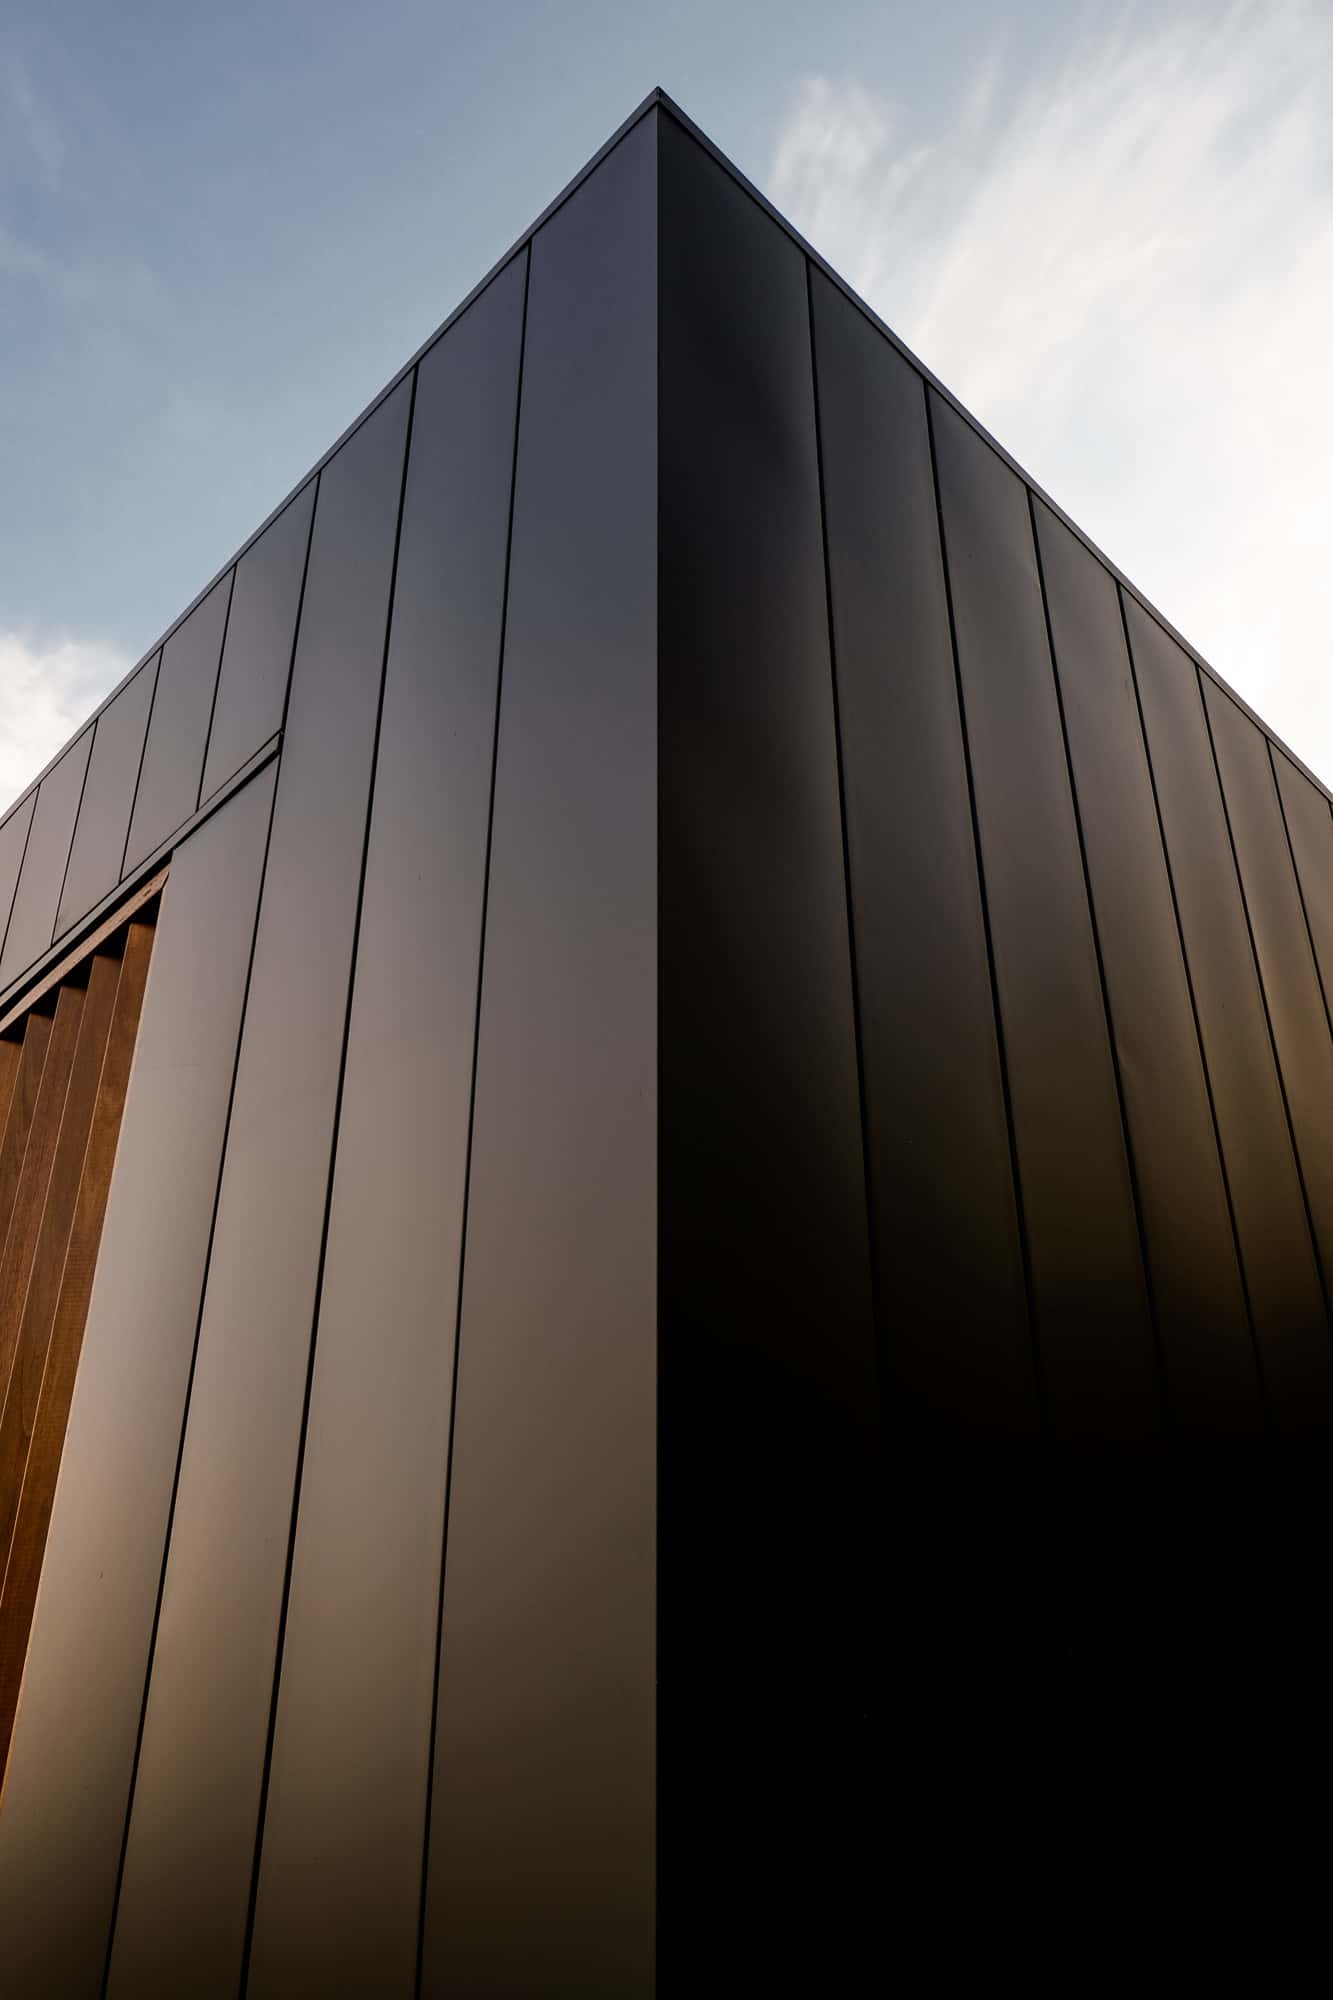 Interlocking Panels Give Seaforth Property a Sleek Modern Look